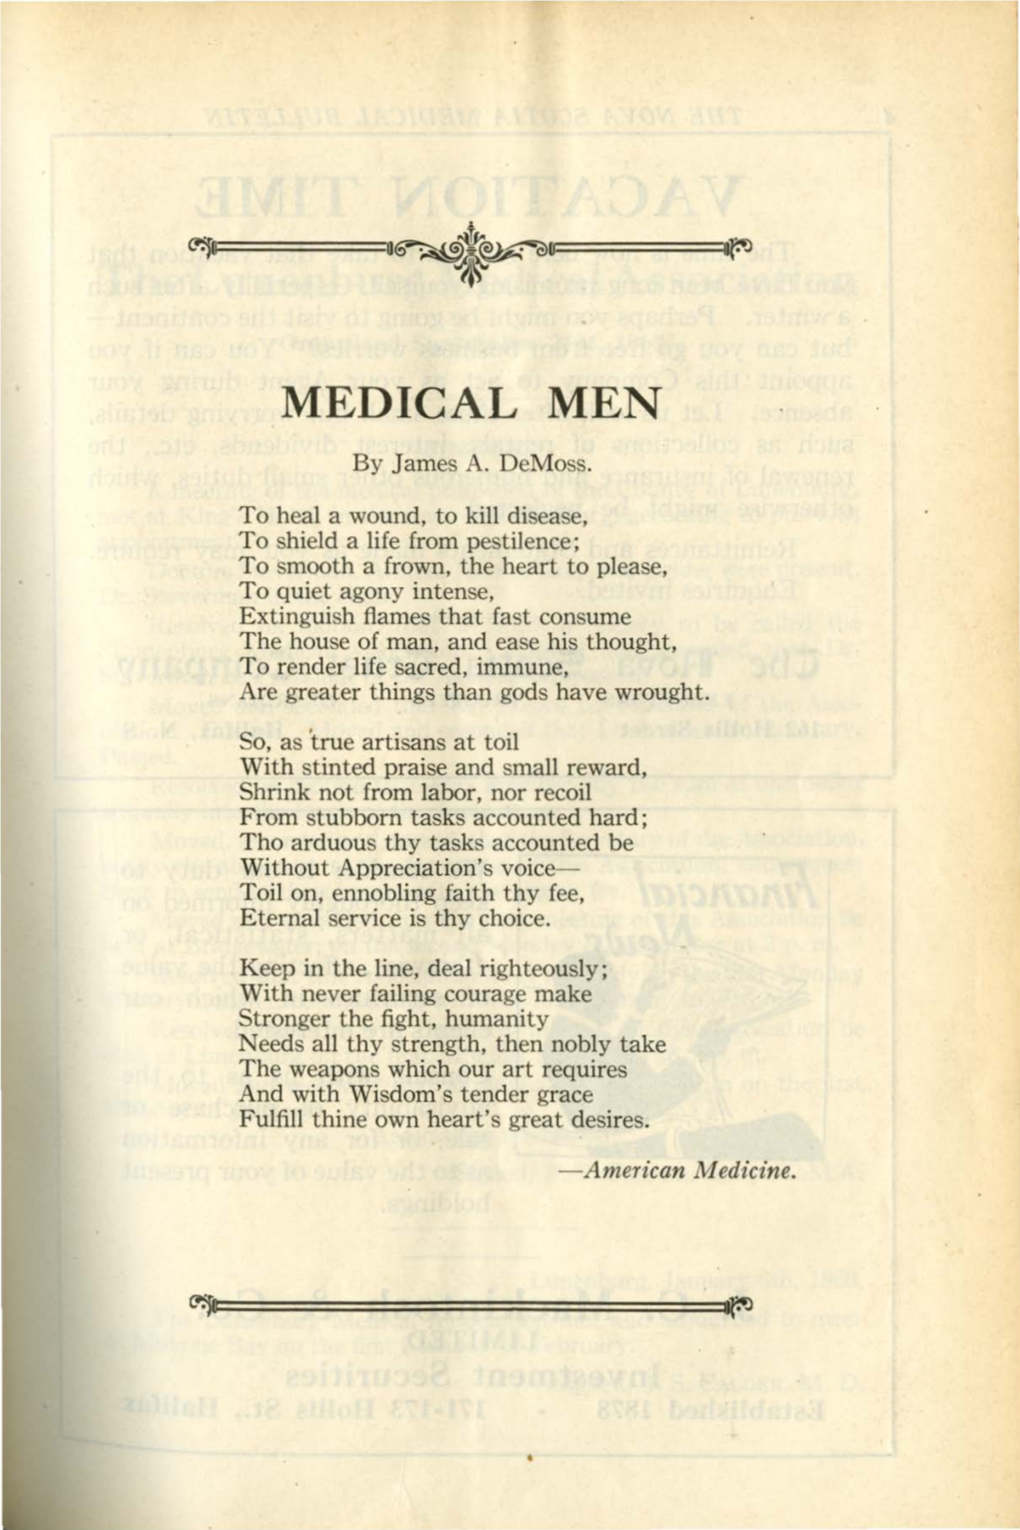 MEDICAL MEN by James A